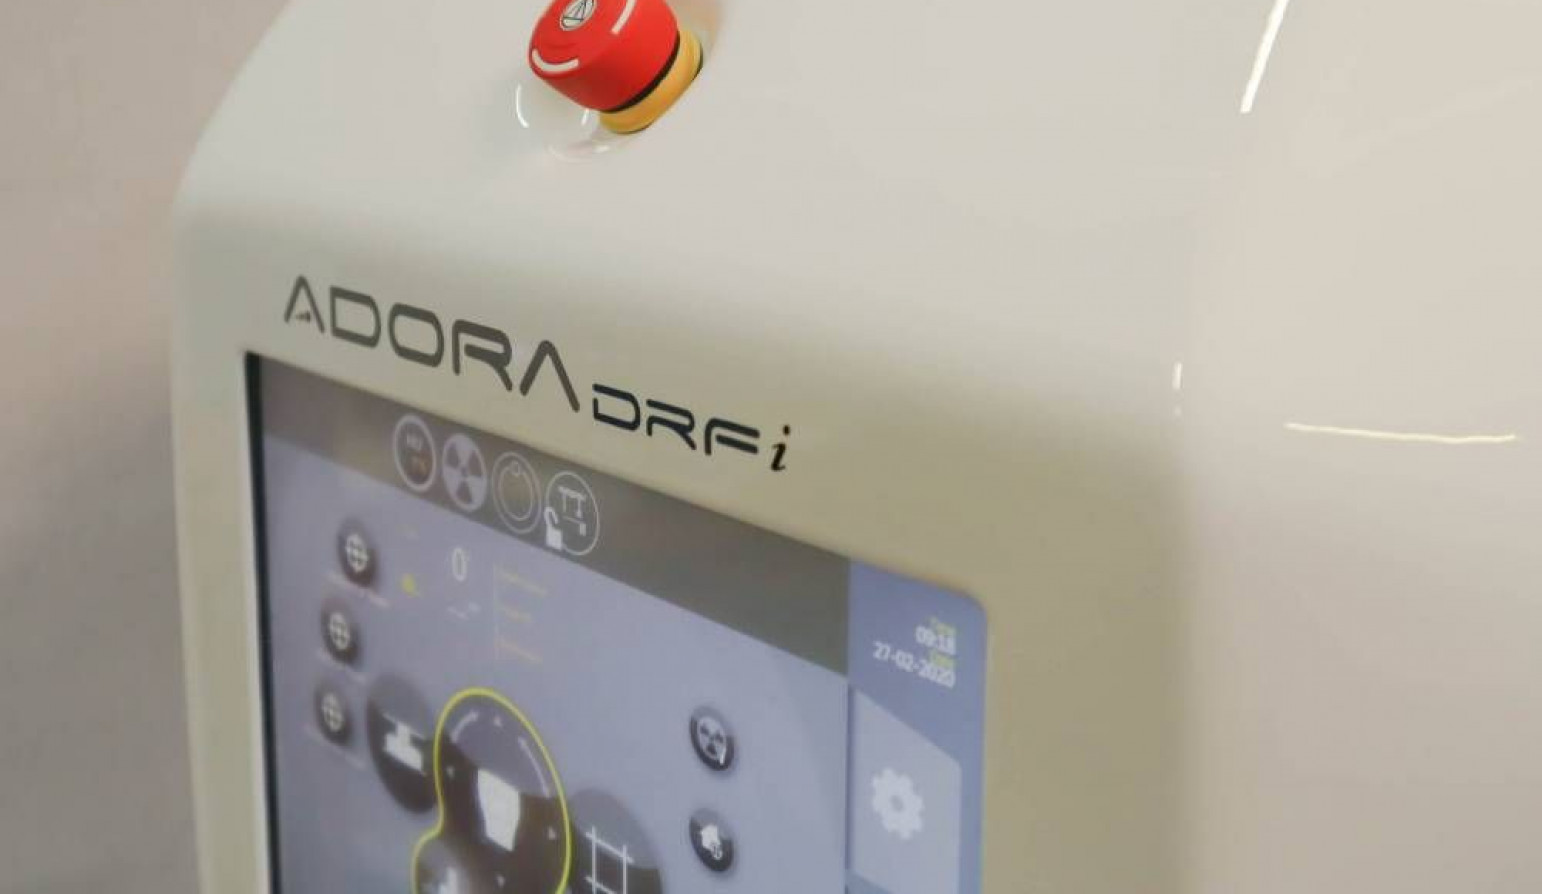 NRT has released the inSPIRE edition of Adora DRFi